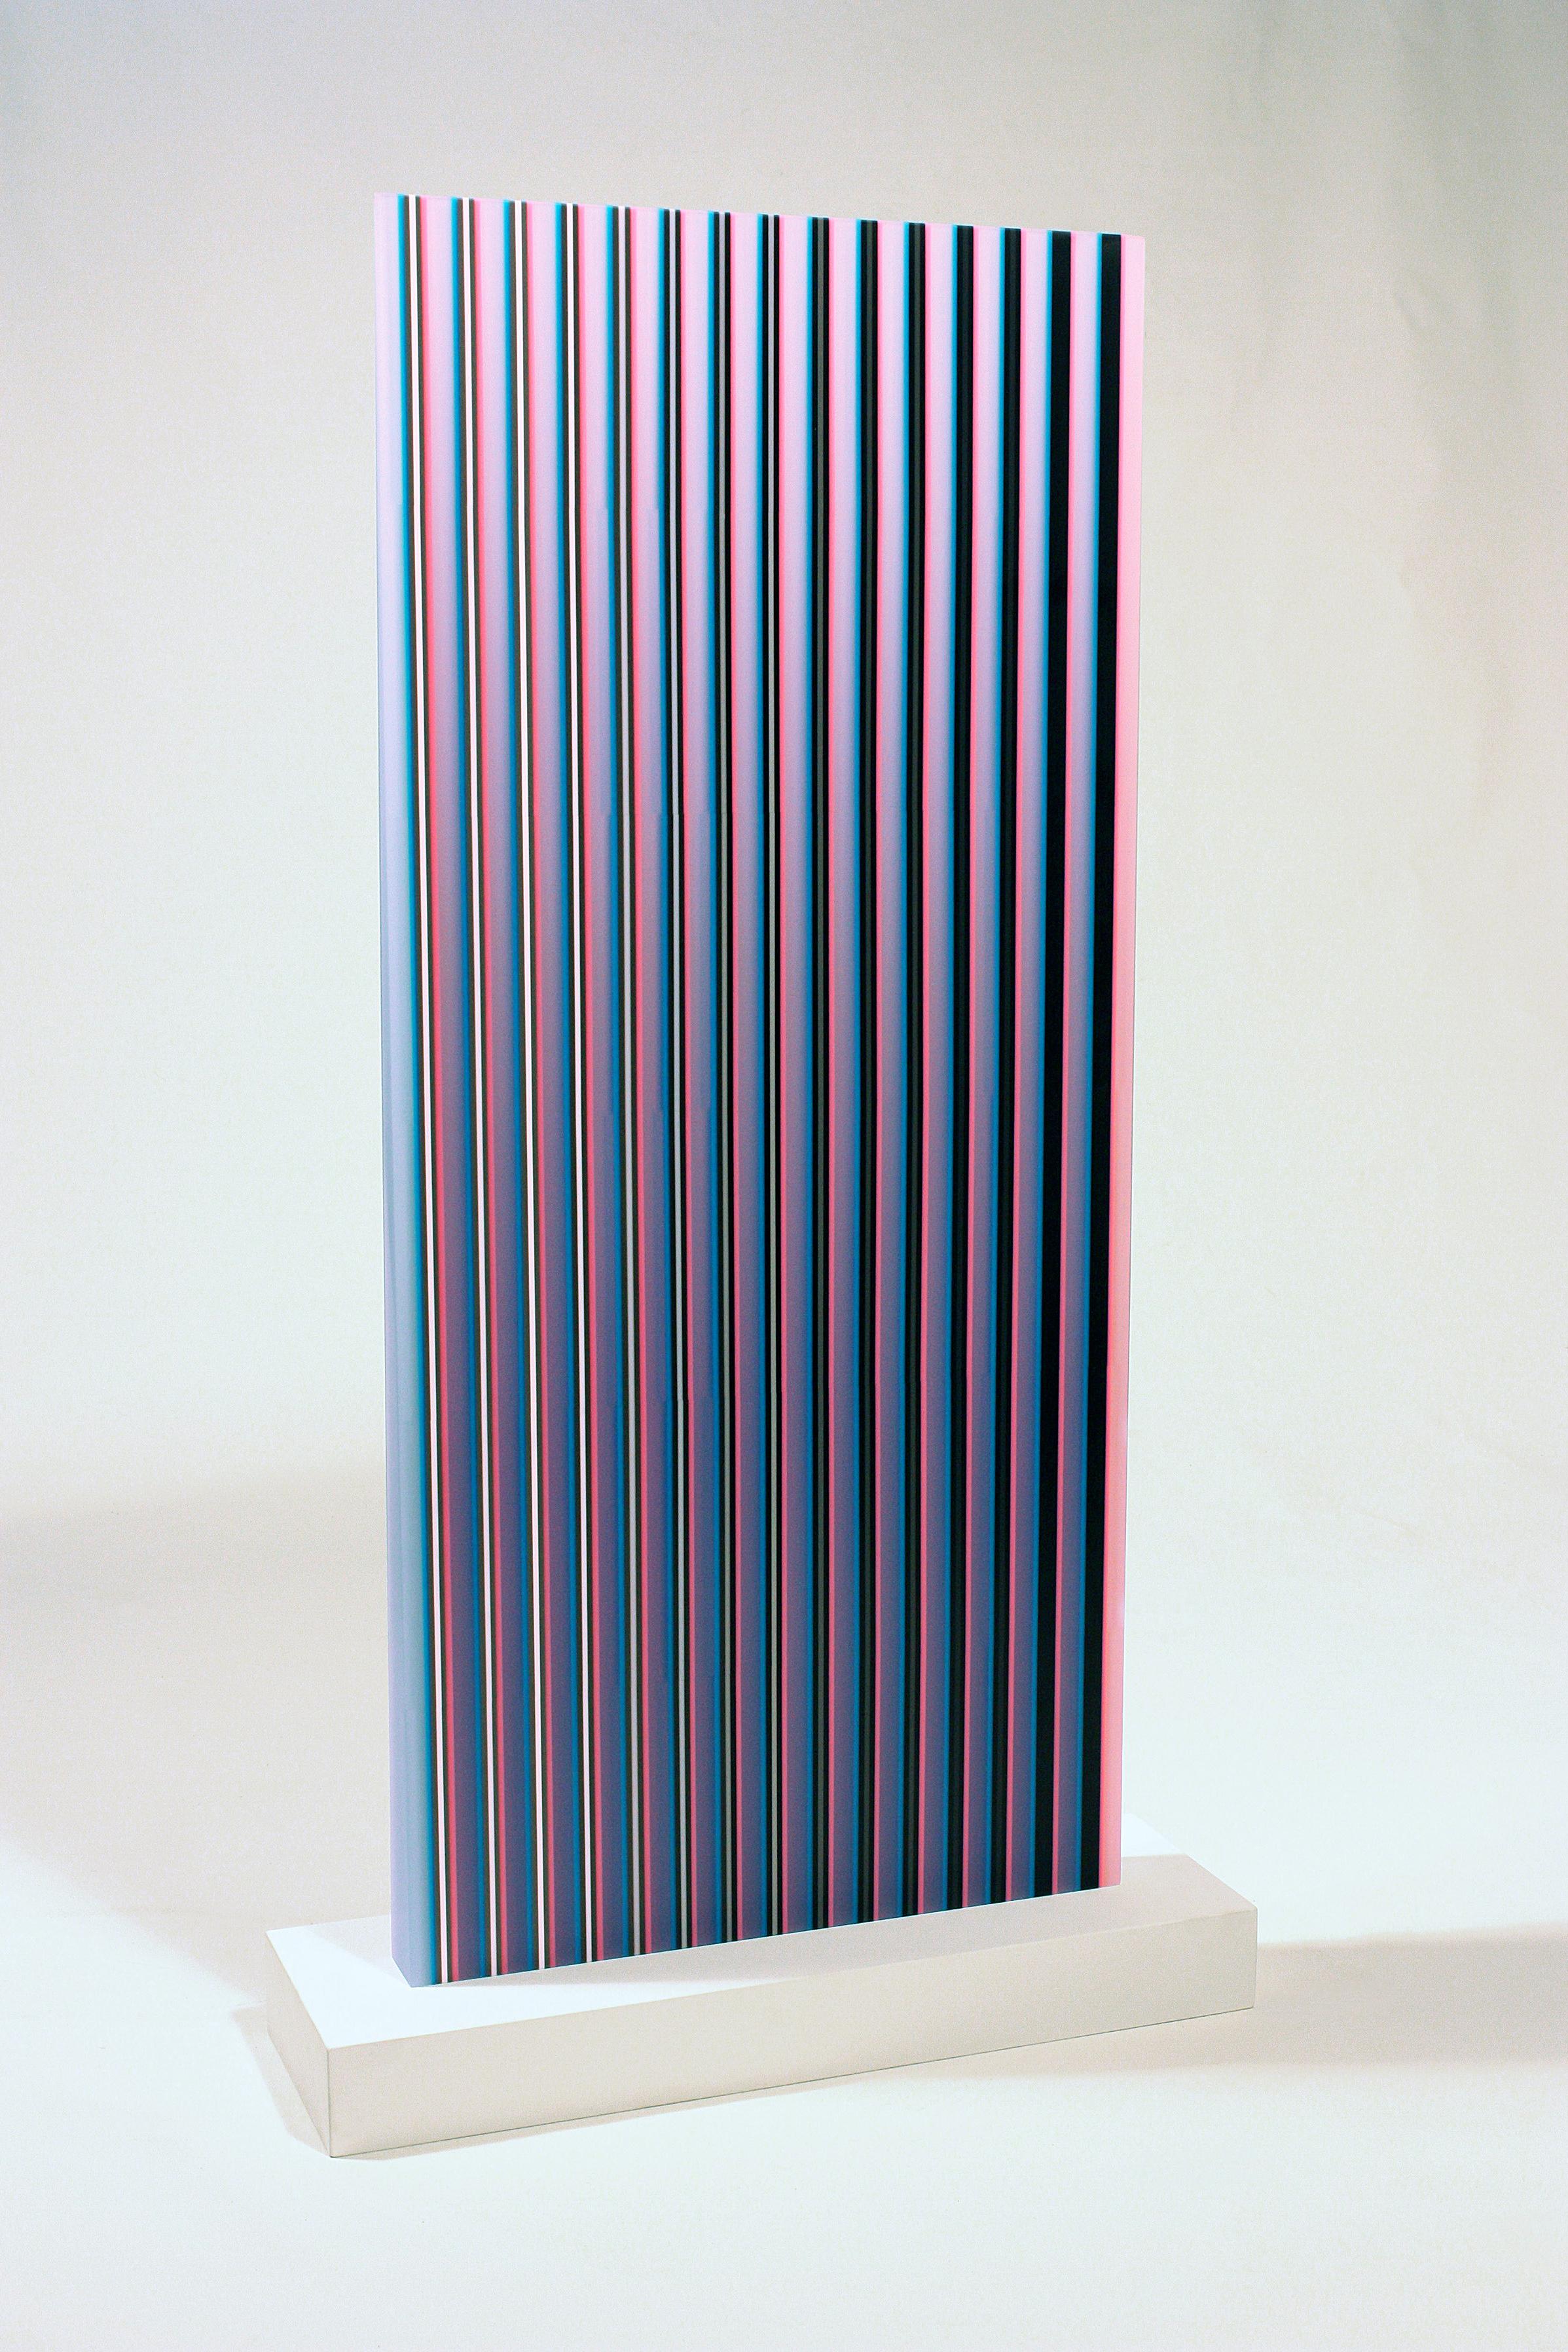 Black Pink Blue Wedge - Art by Eric Zammitt